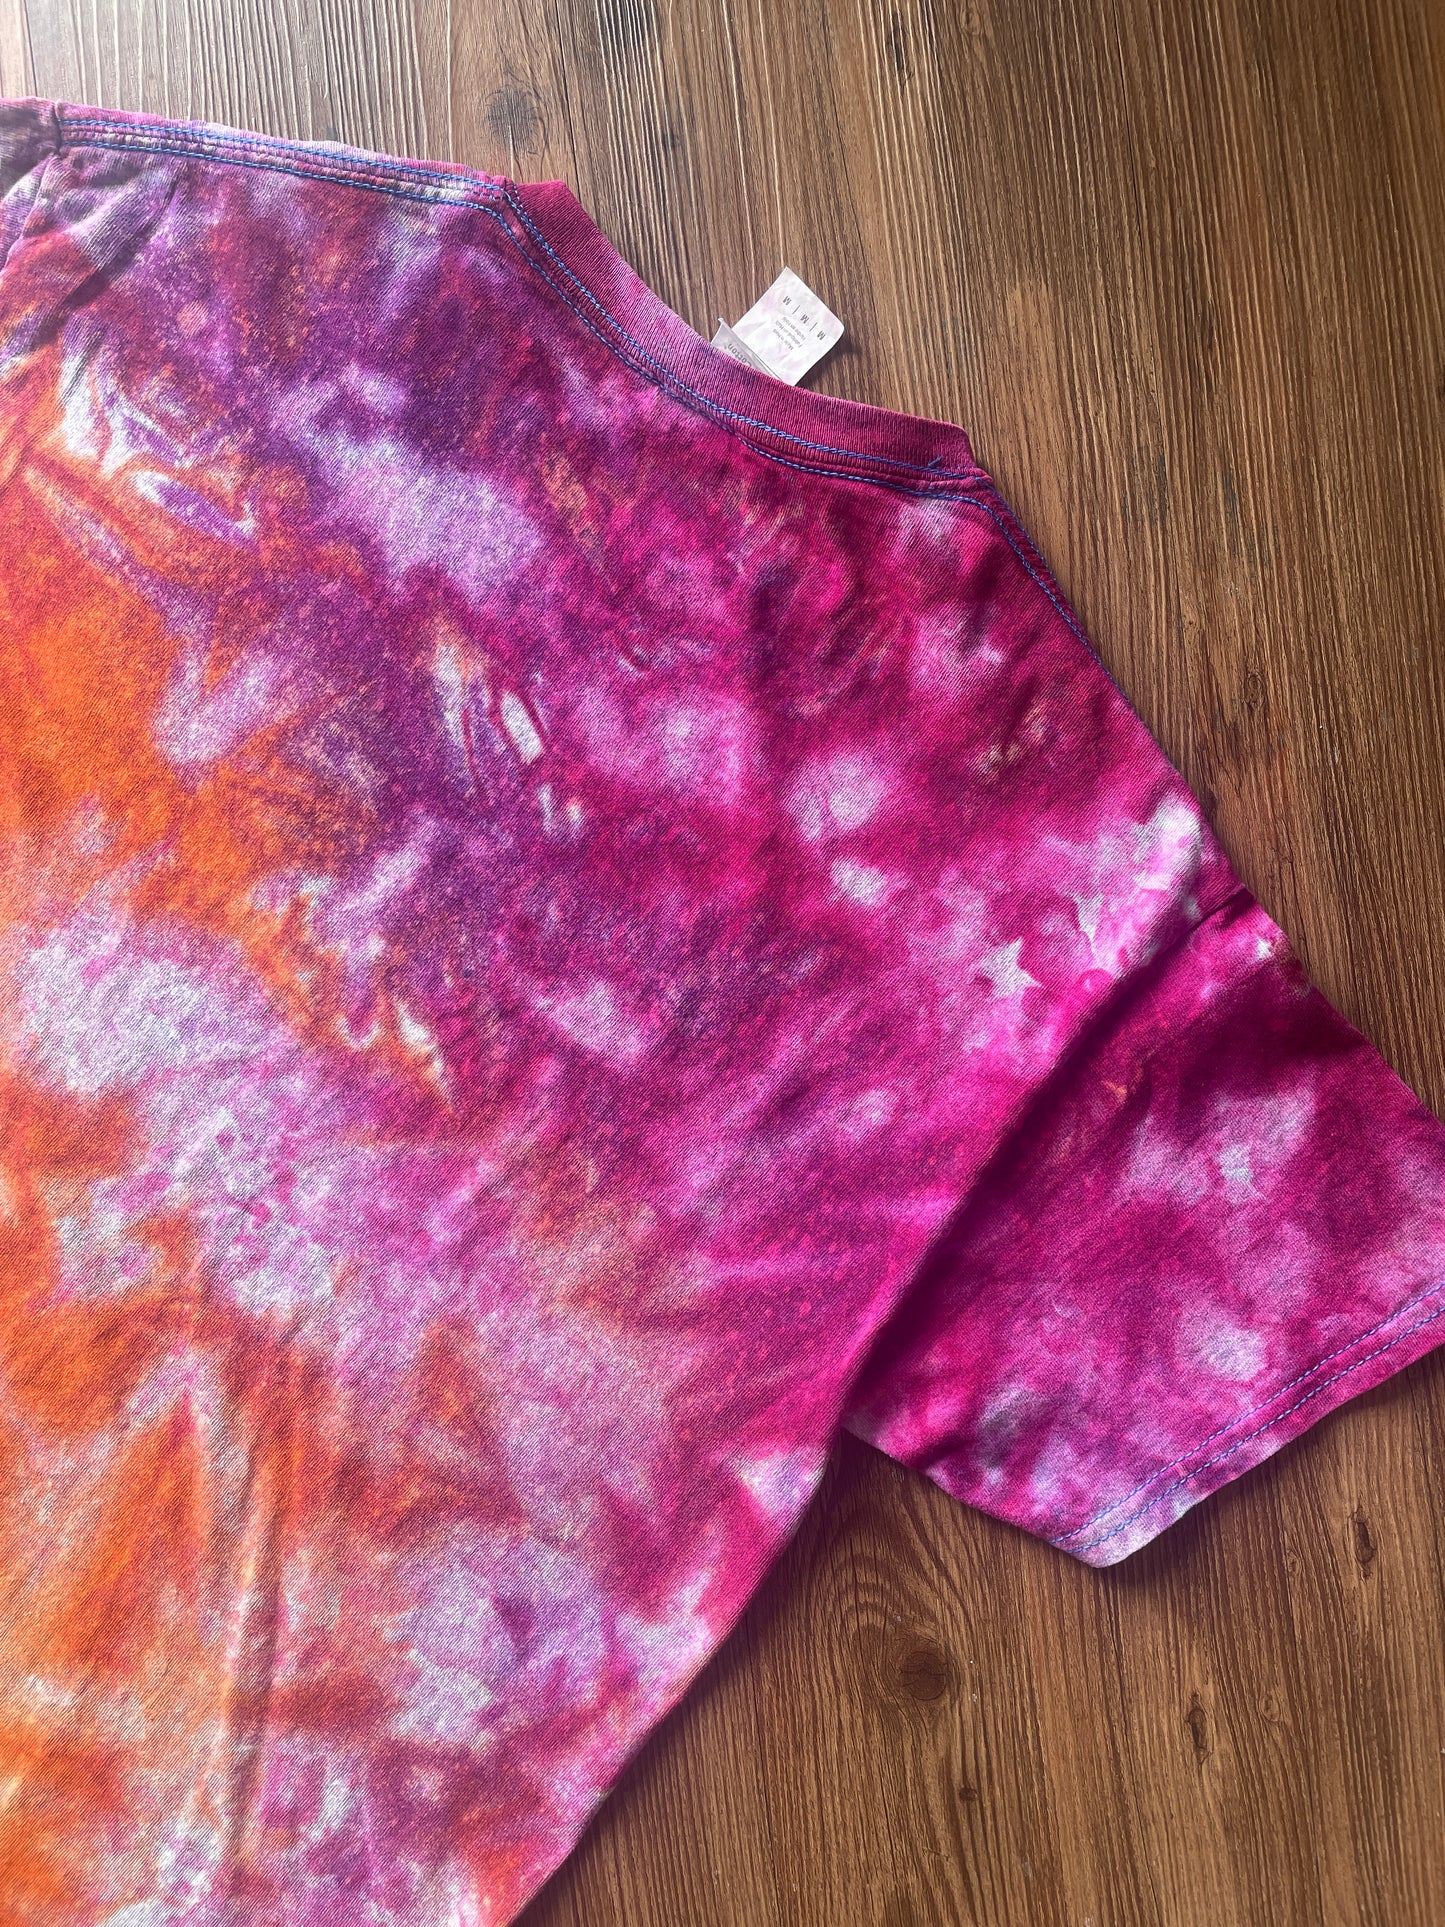 Medium Men’s Moab Utah Handmade Tie Dye T-Shirt with Embroidered Kokopelli Details | Pink and Orange Galaxy Reverse Tie Dye Short Sleeve